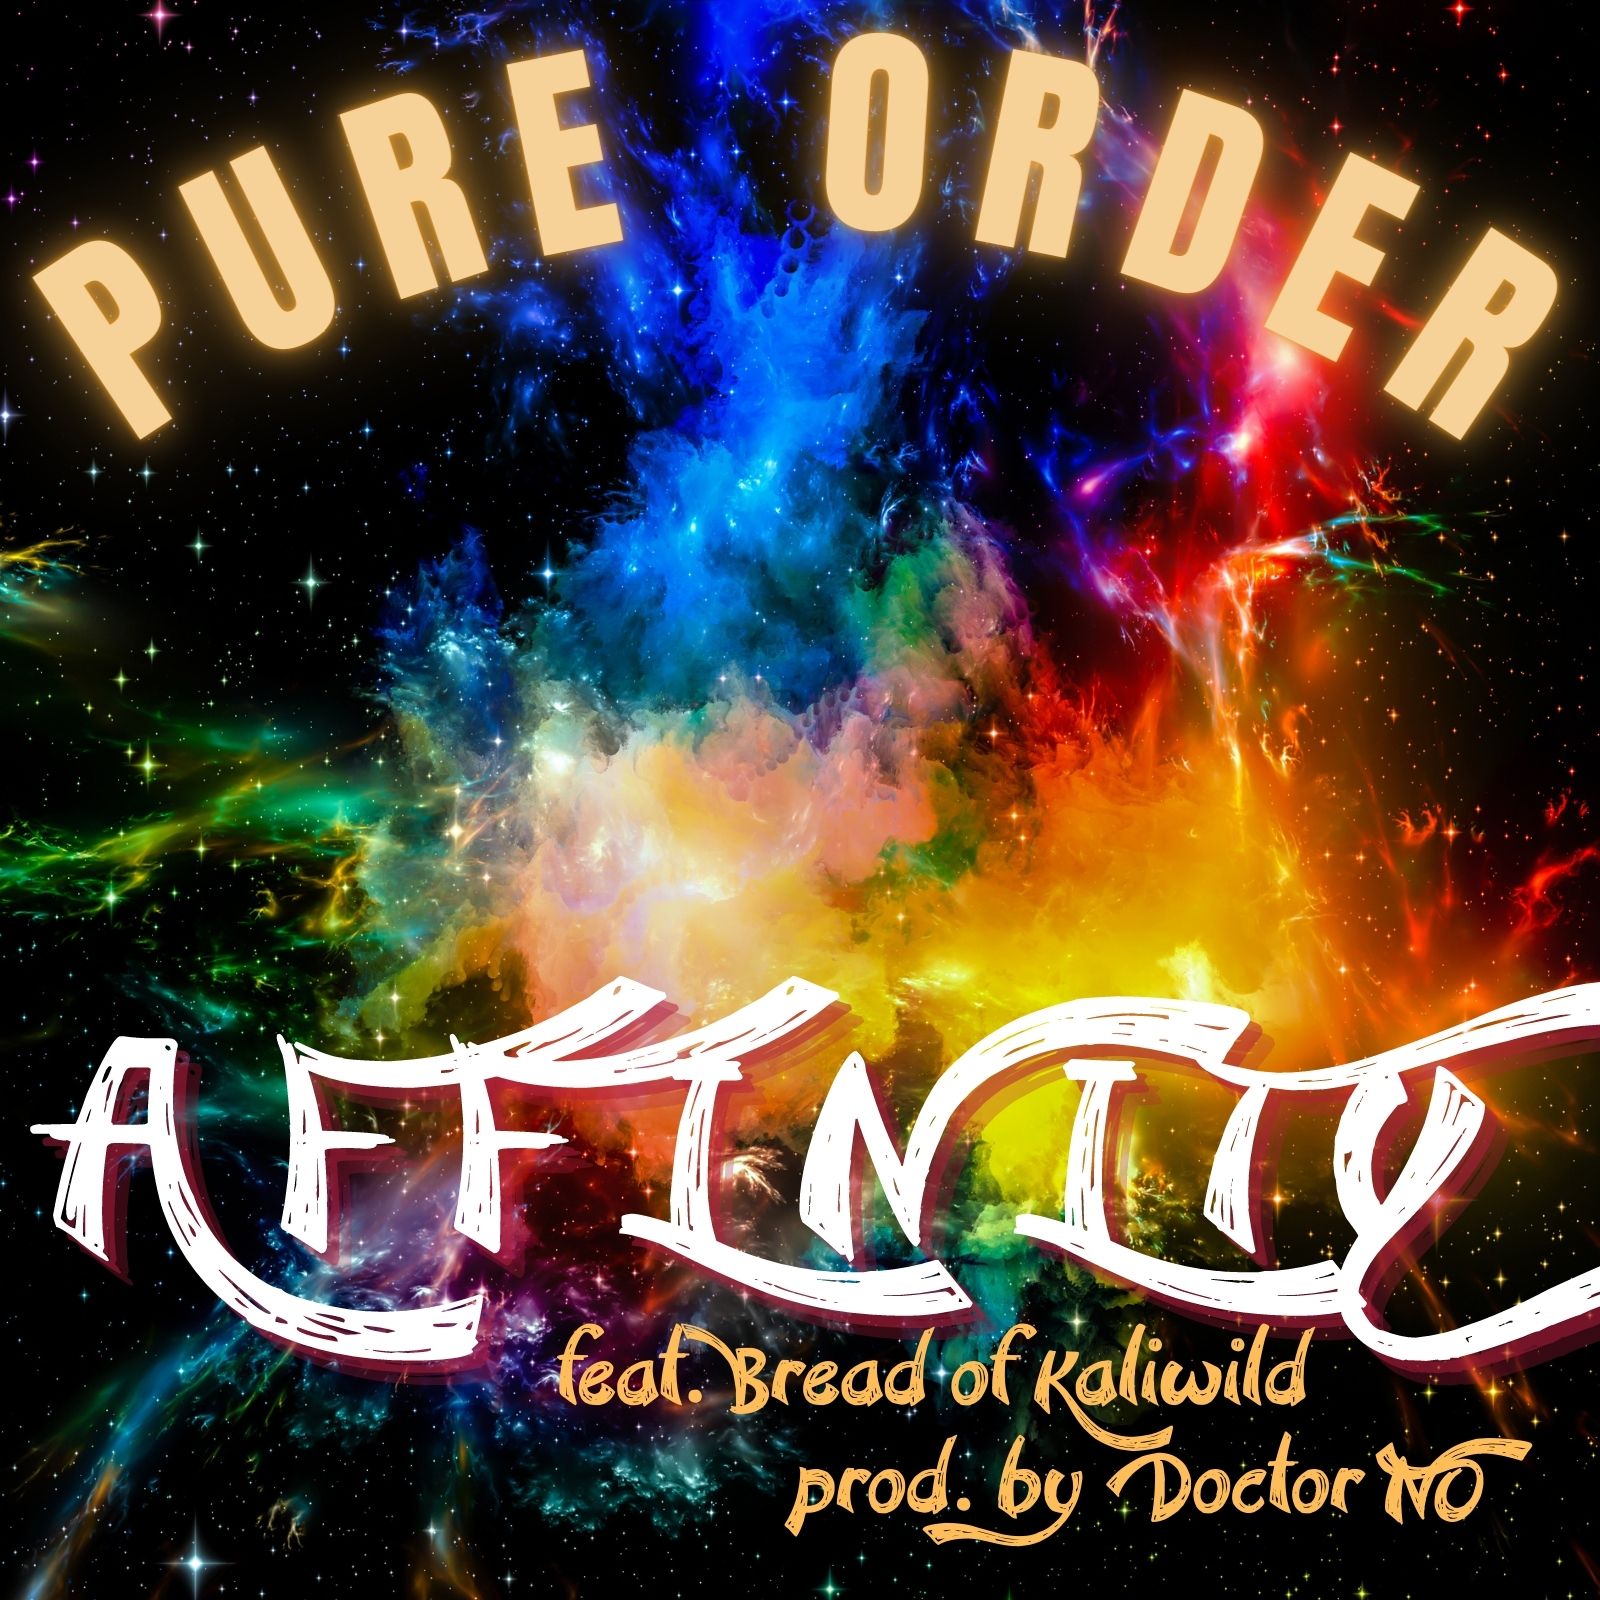 Pure Order “Affinity” single artwork